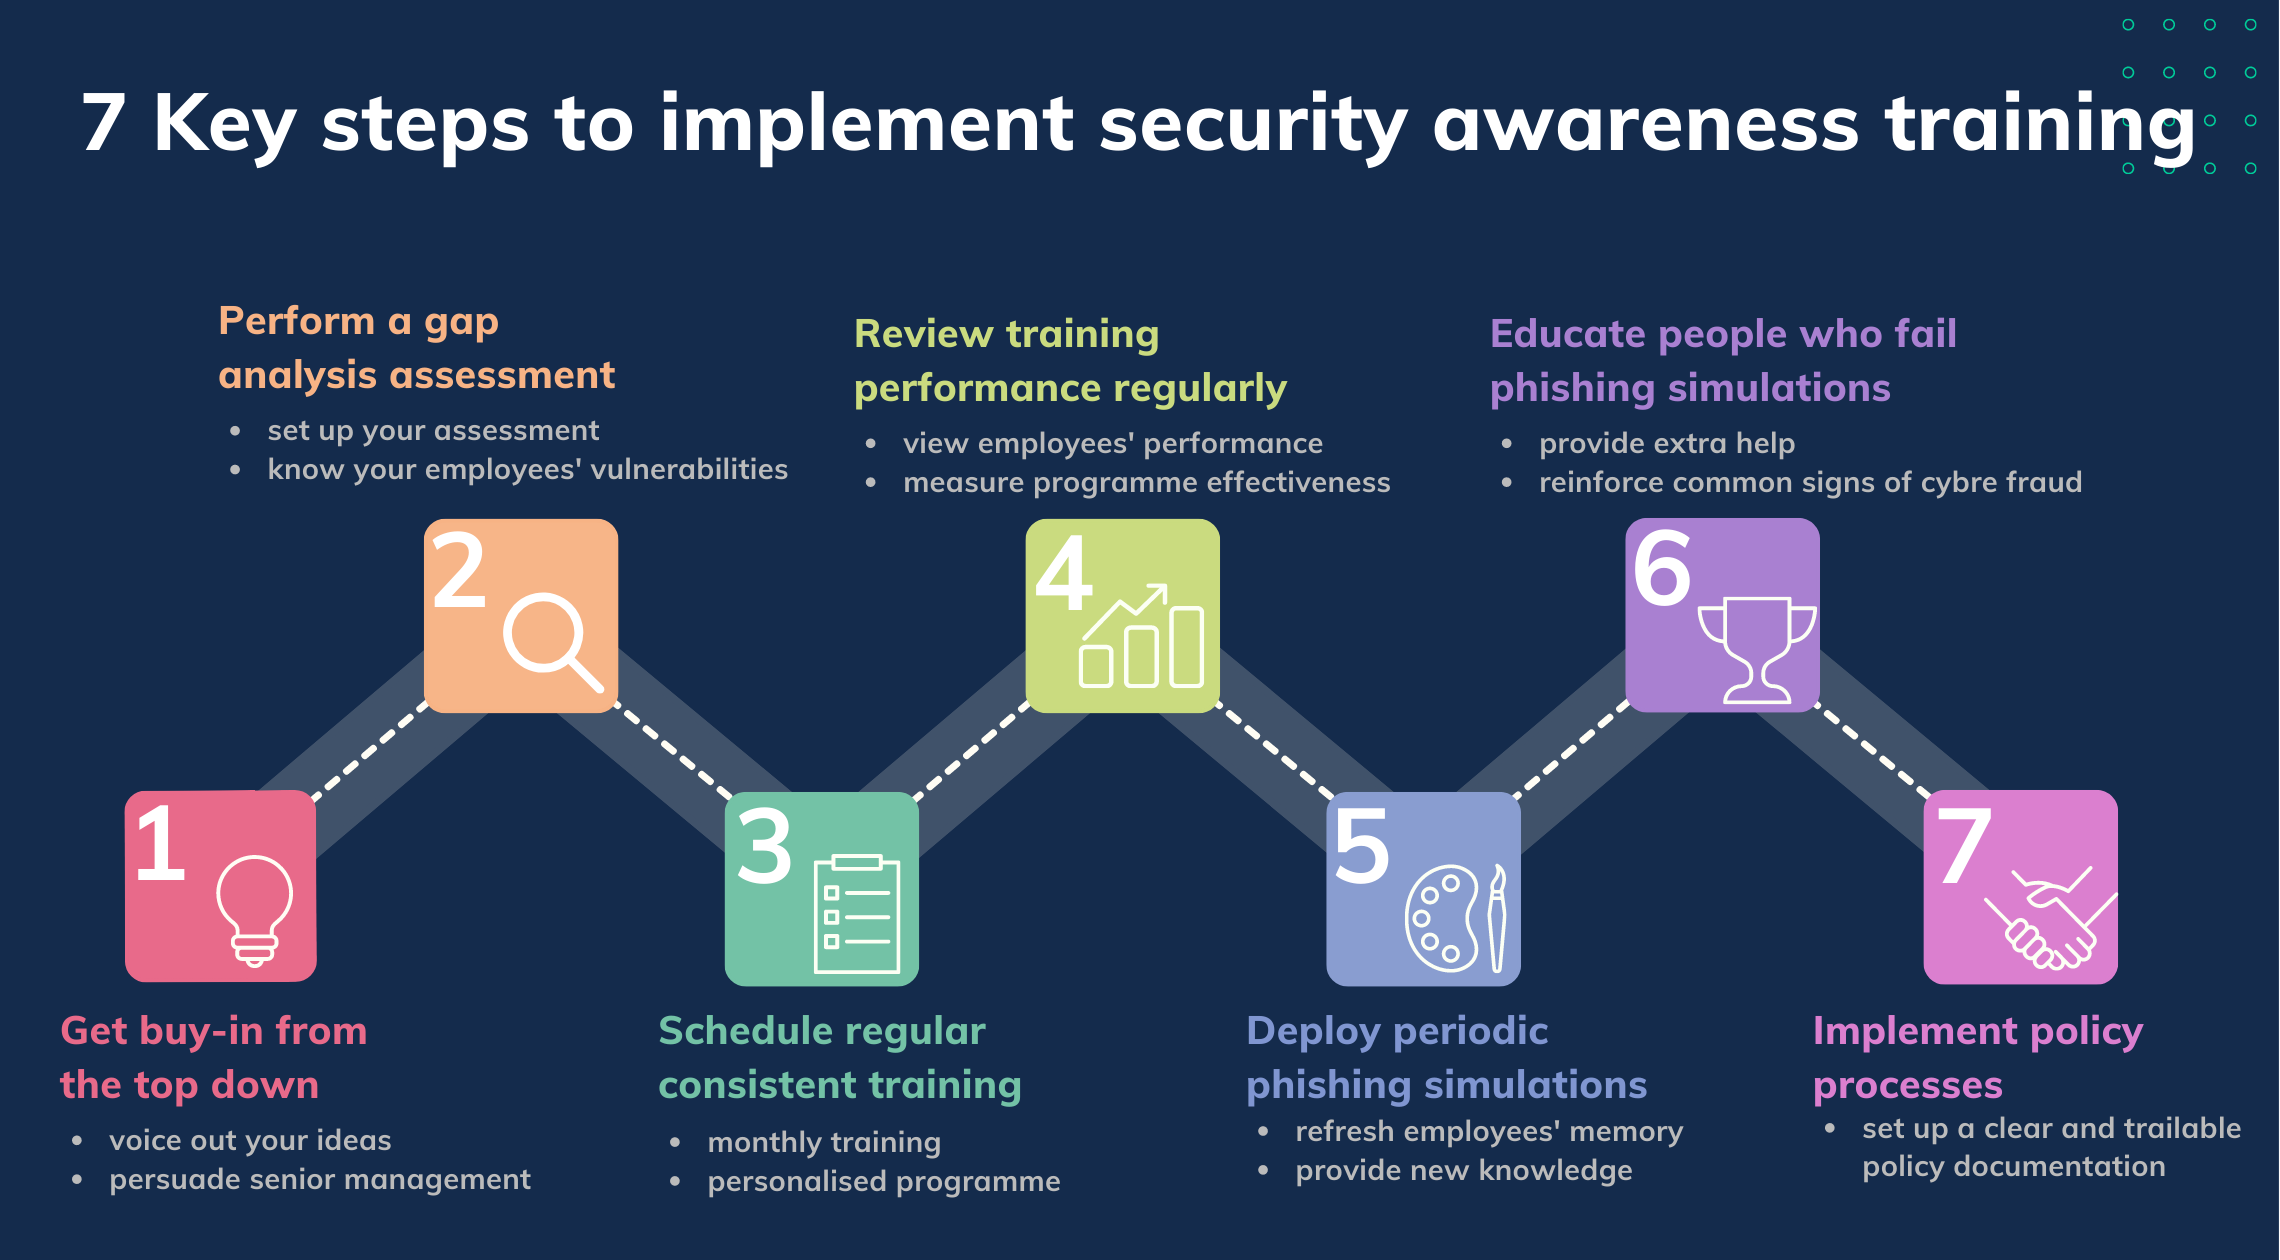 security training academy business plan pdf